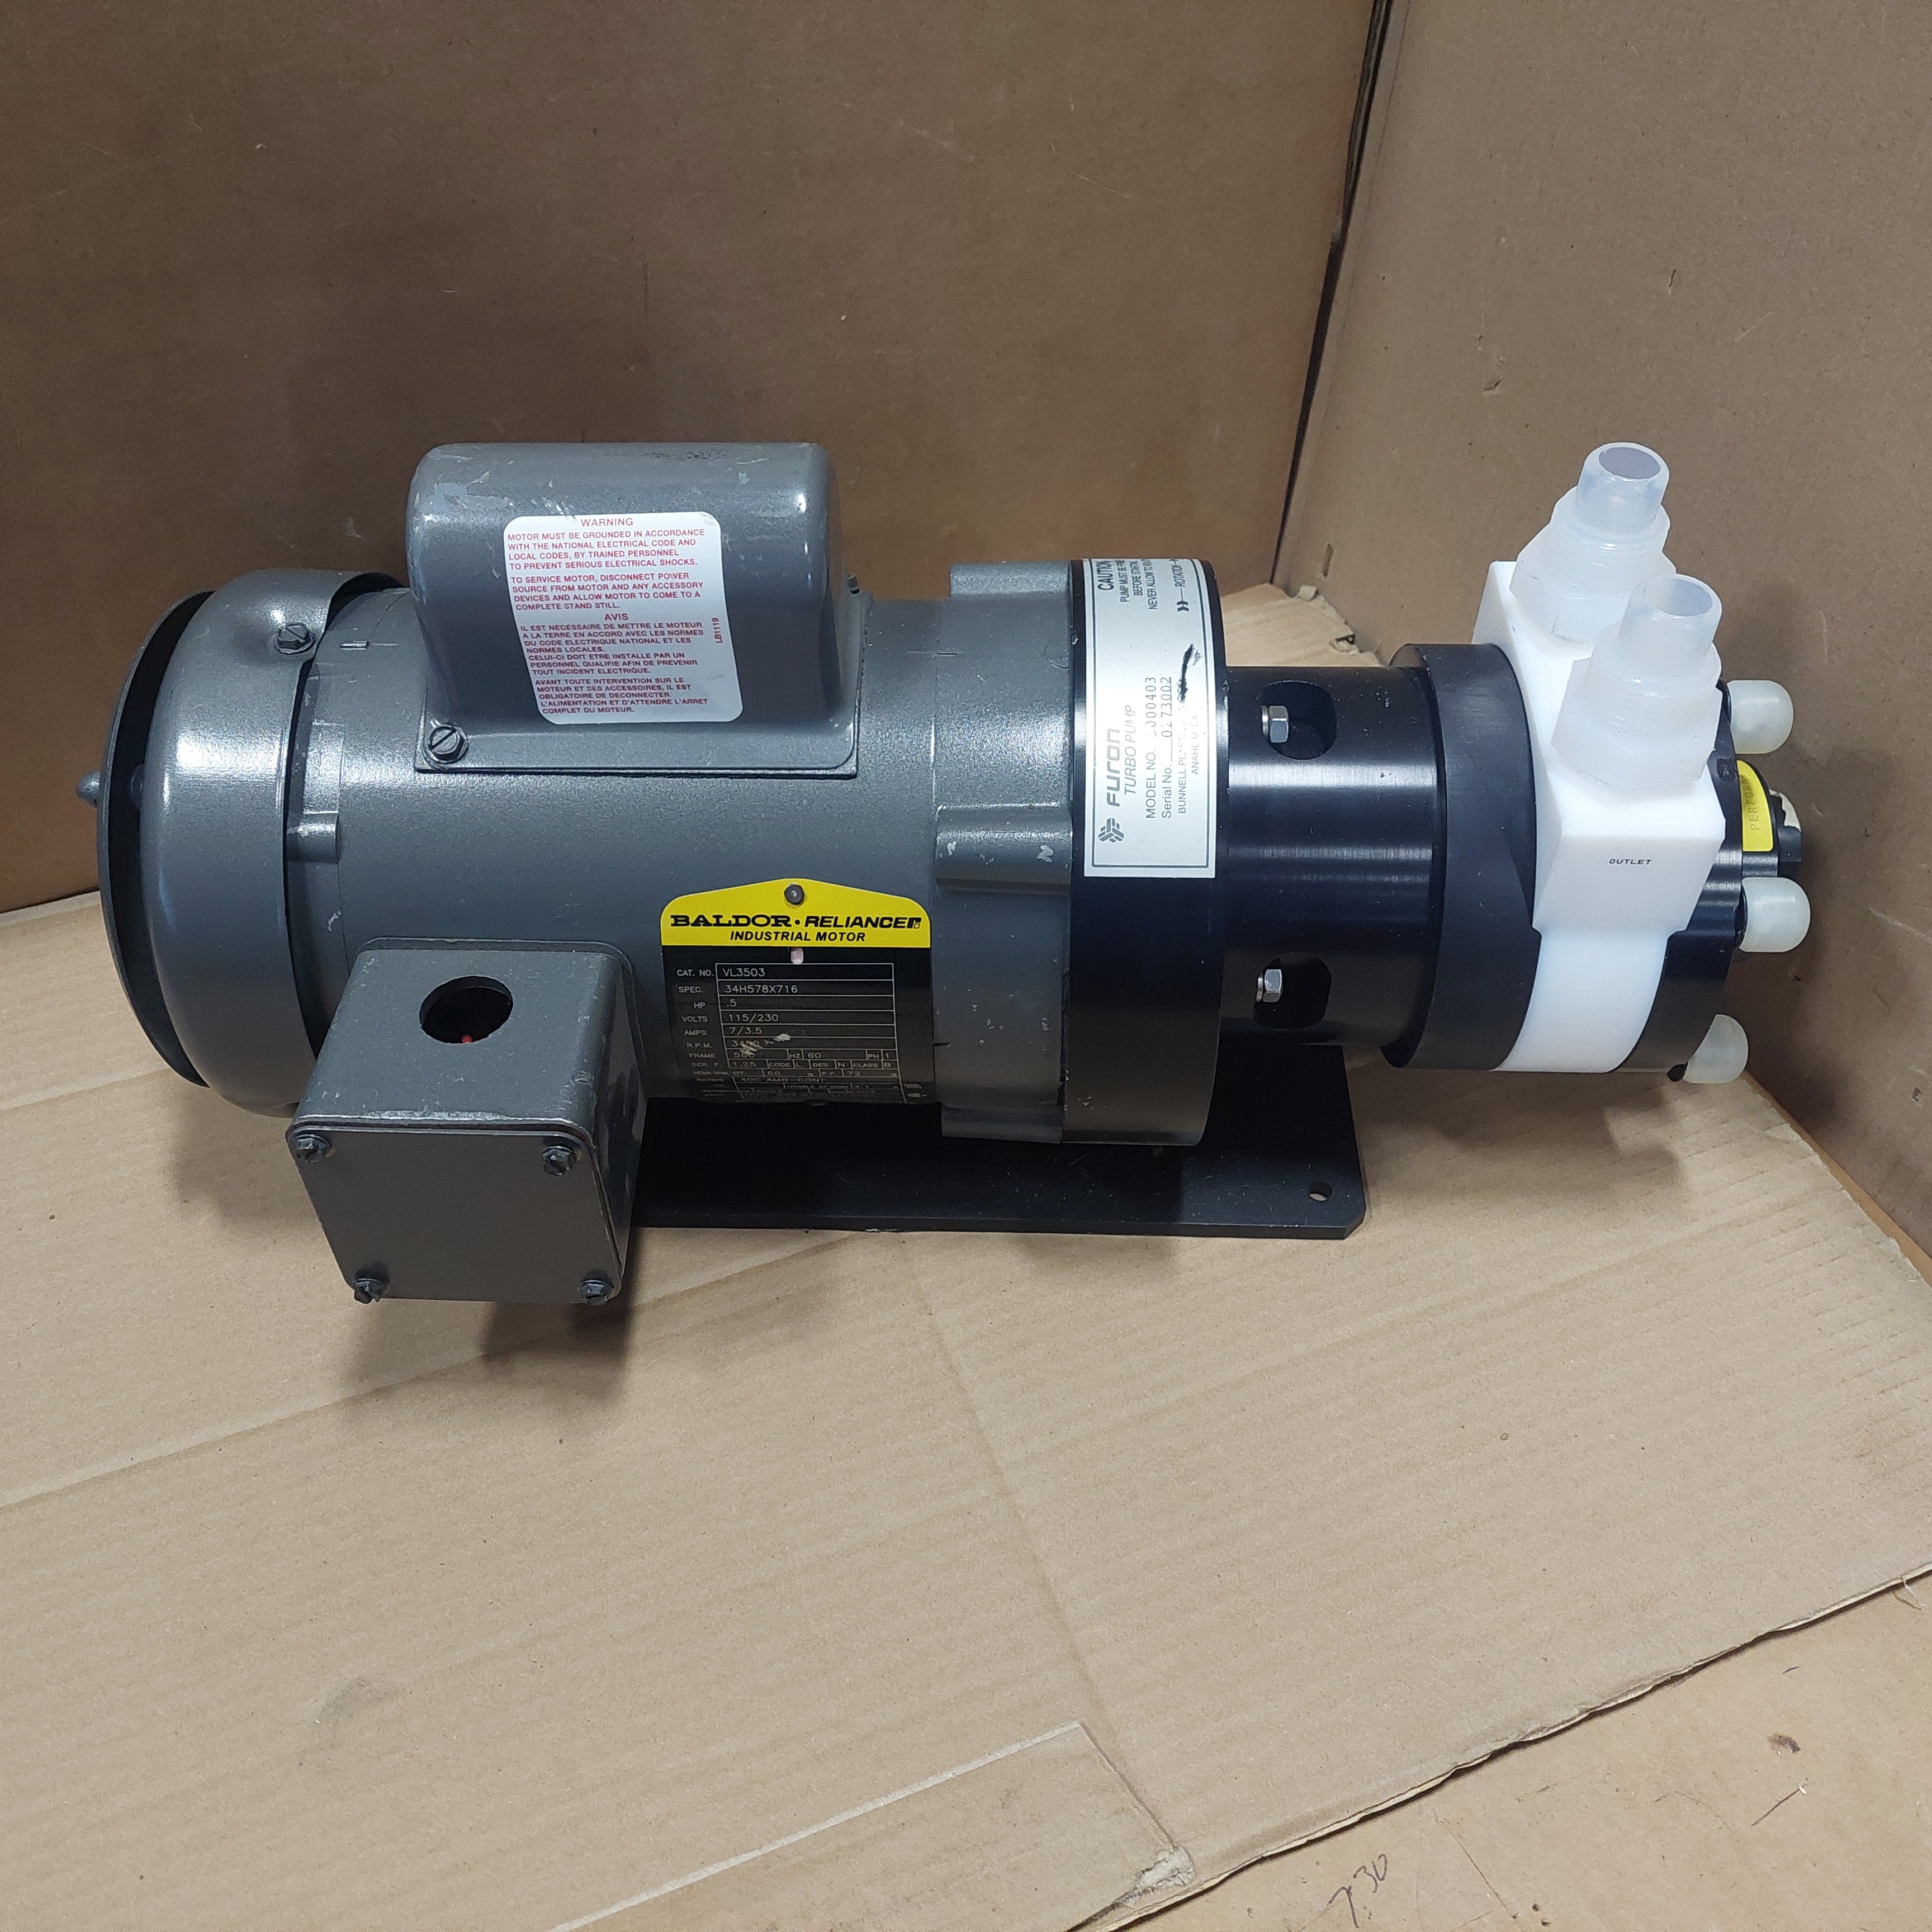 Furon Turbo Pump 3000403 Distilled Water Process Pump 115/230V 1/2 HP New